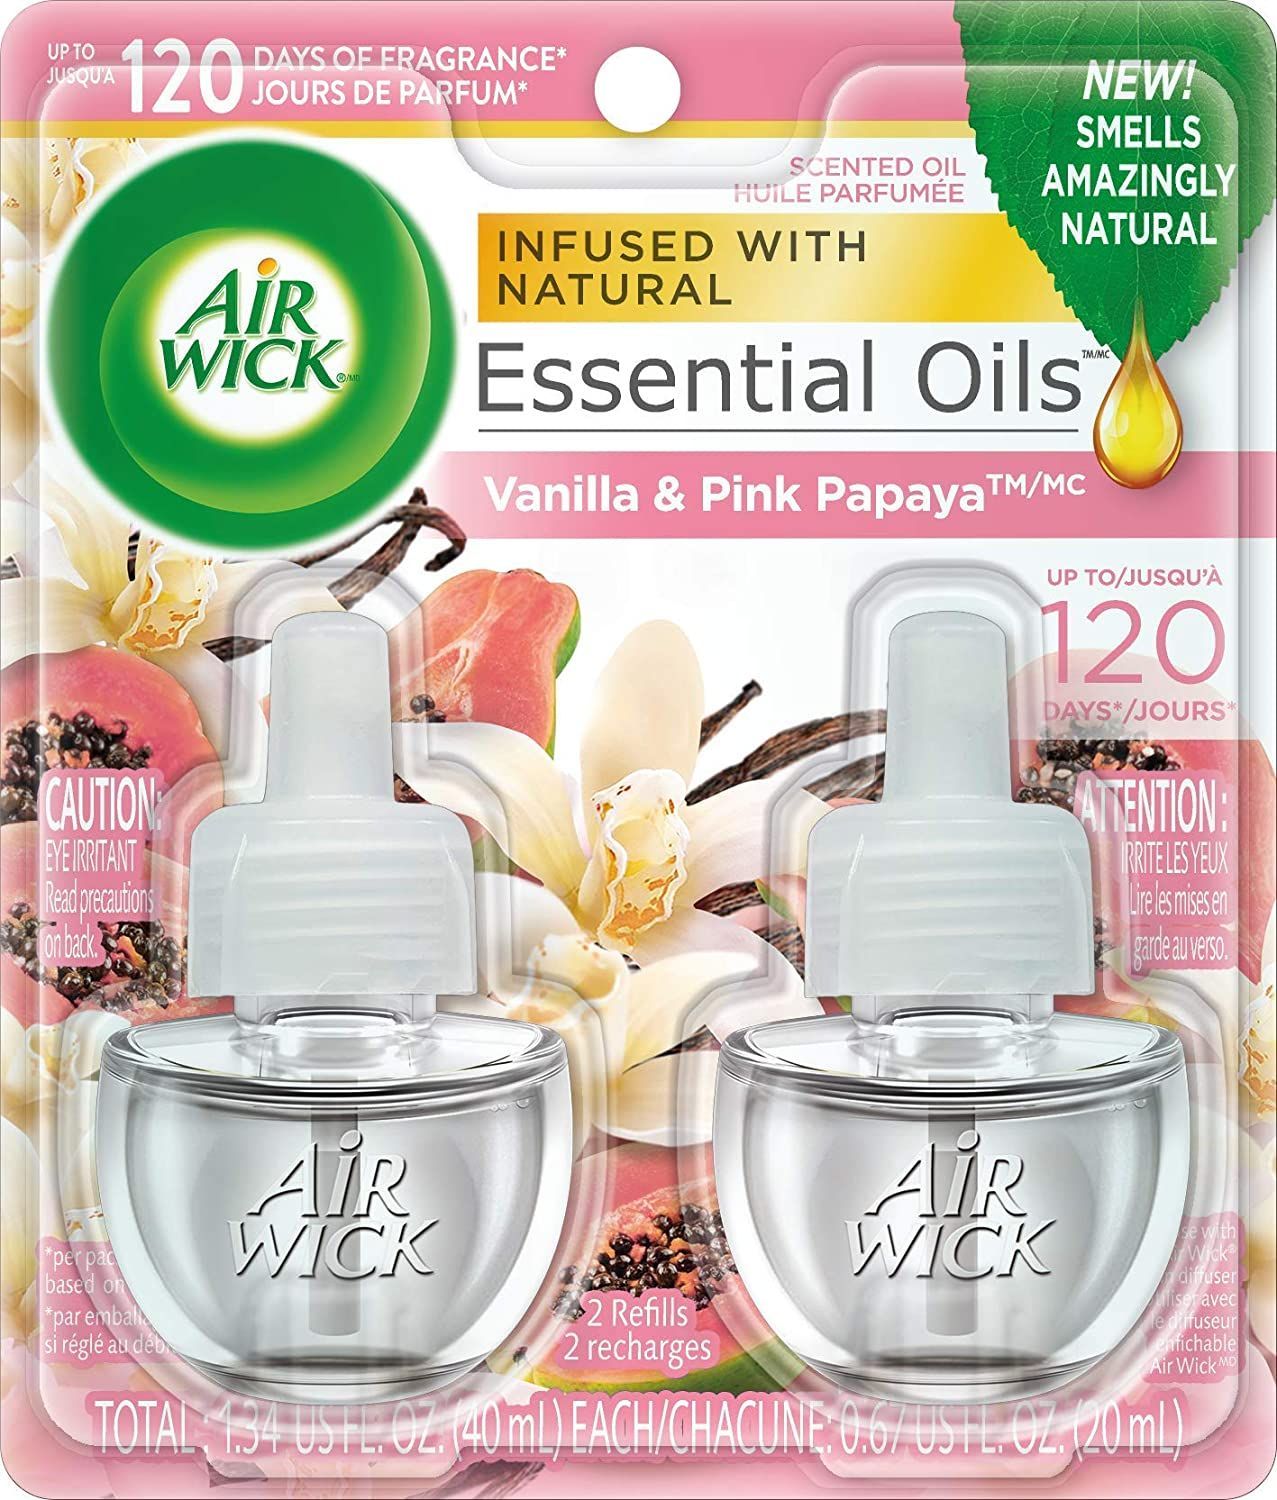 Air Wick Plug-In Scented Oil in Vanilla & Pink Papaya